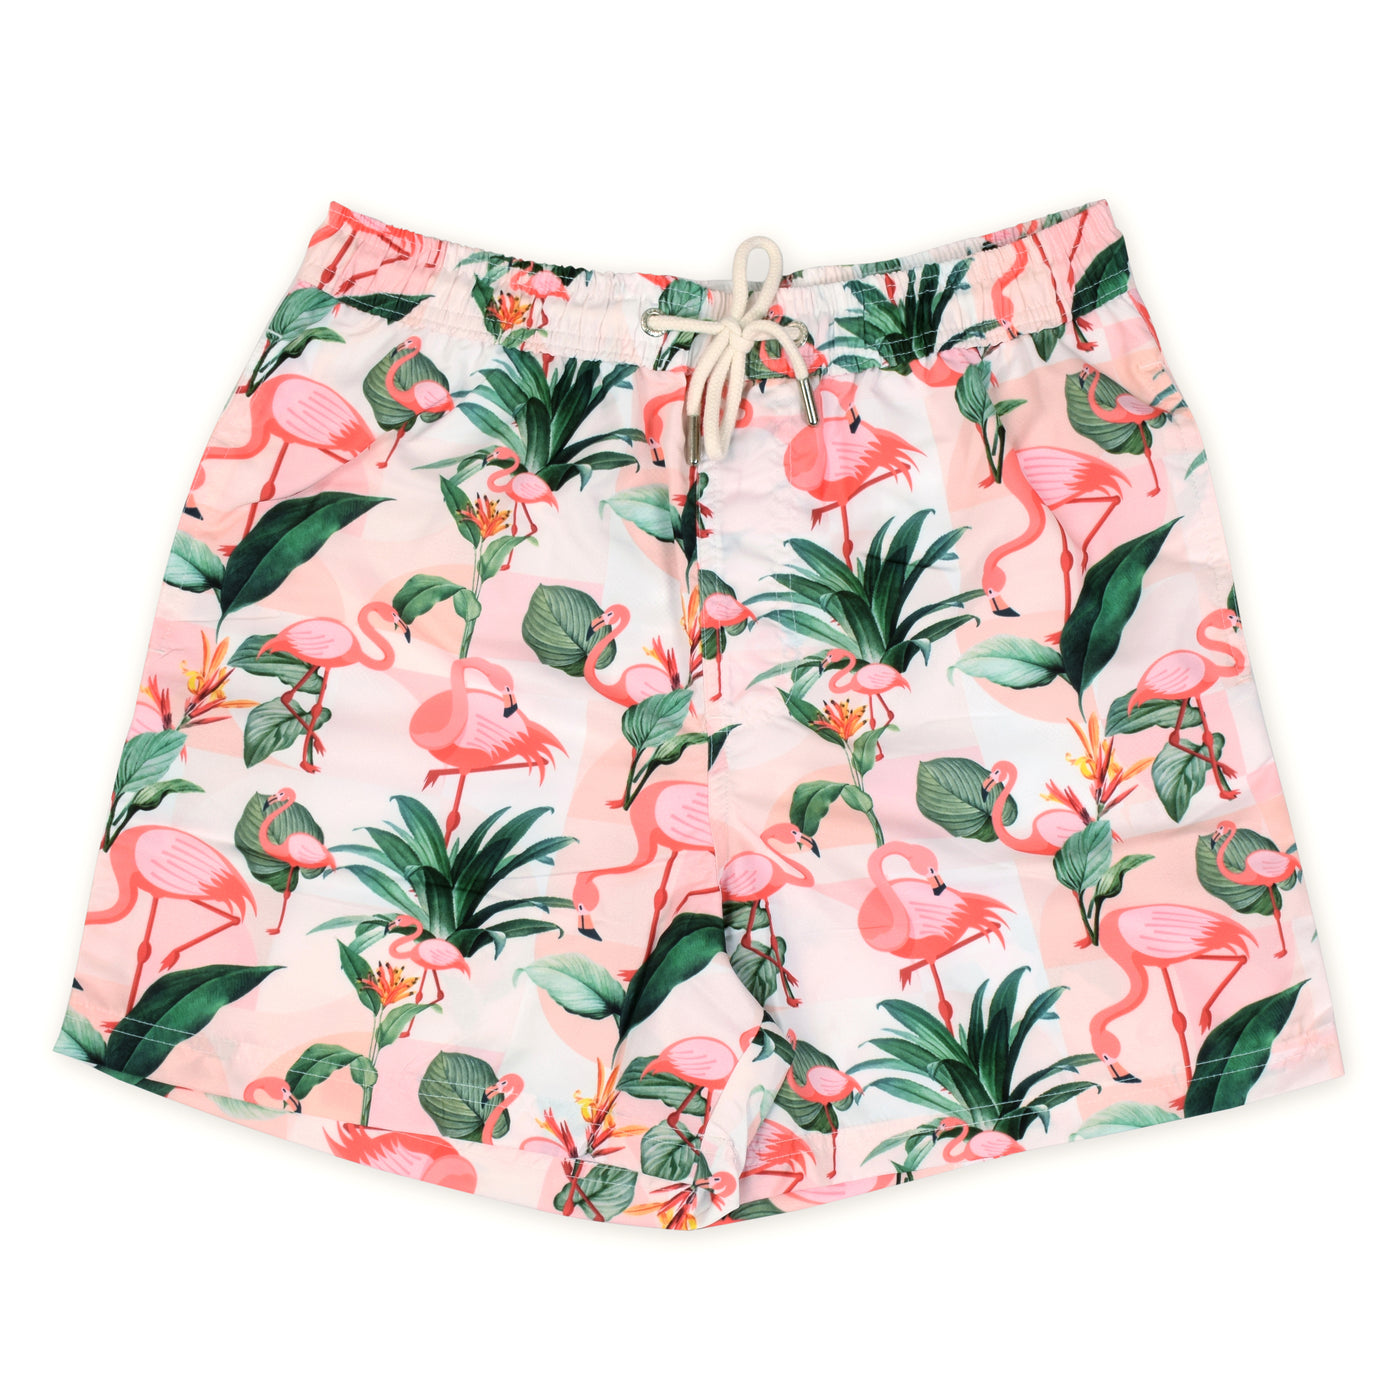 Buy now let's flamingle swim shorts